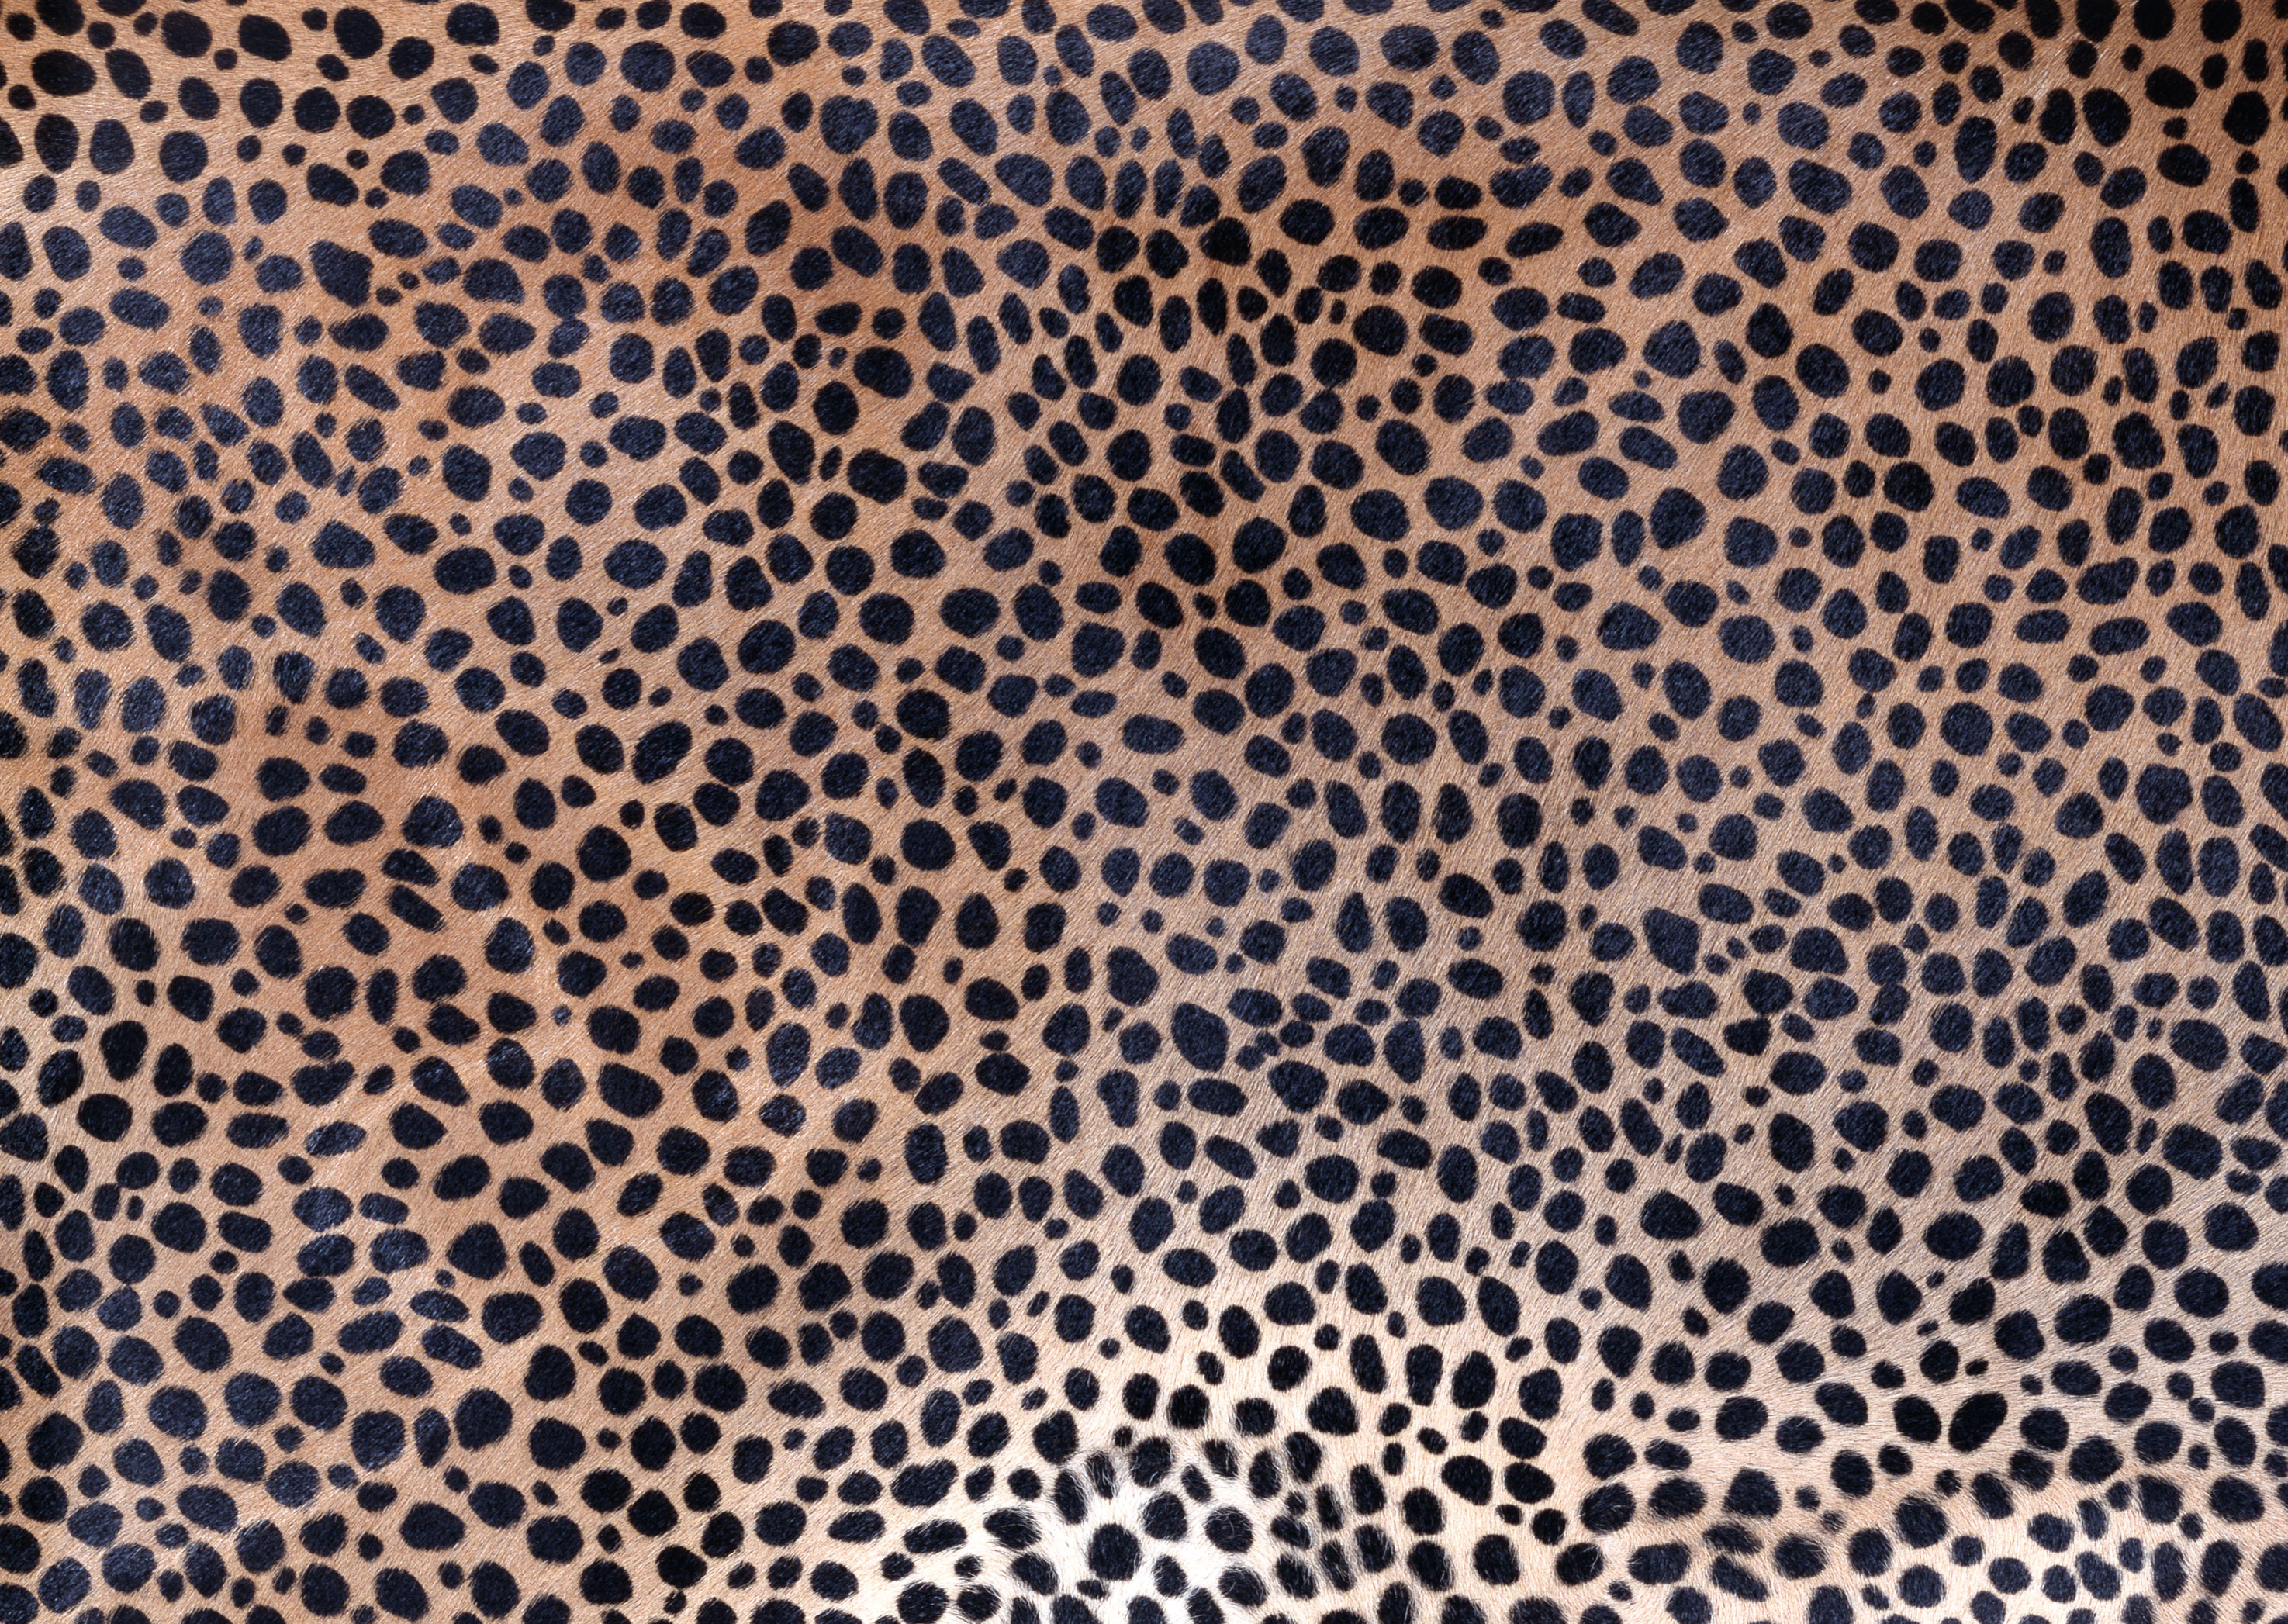 Free photo: Animal Skin Texture - Abstract, Honeycomb, Wild - Free Download  - Jooinn